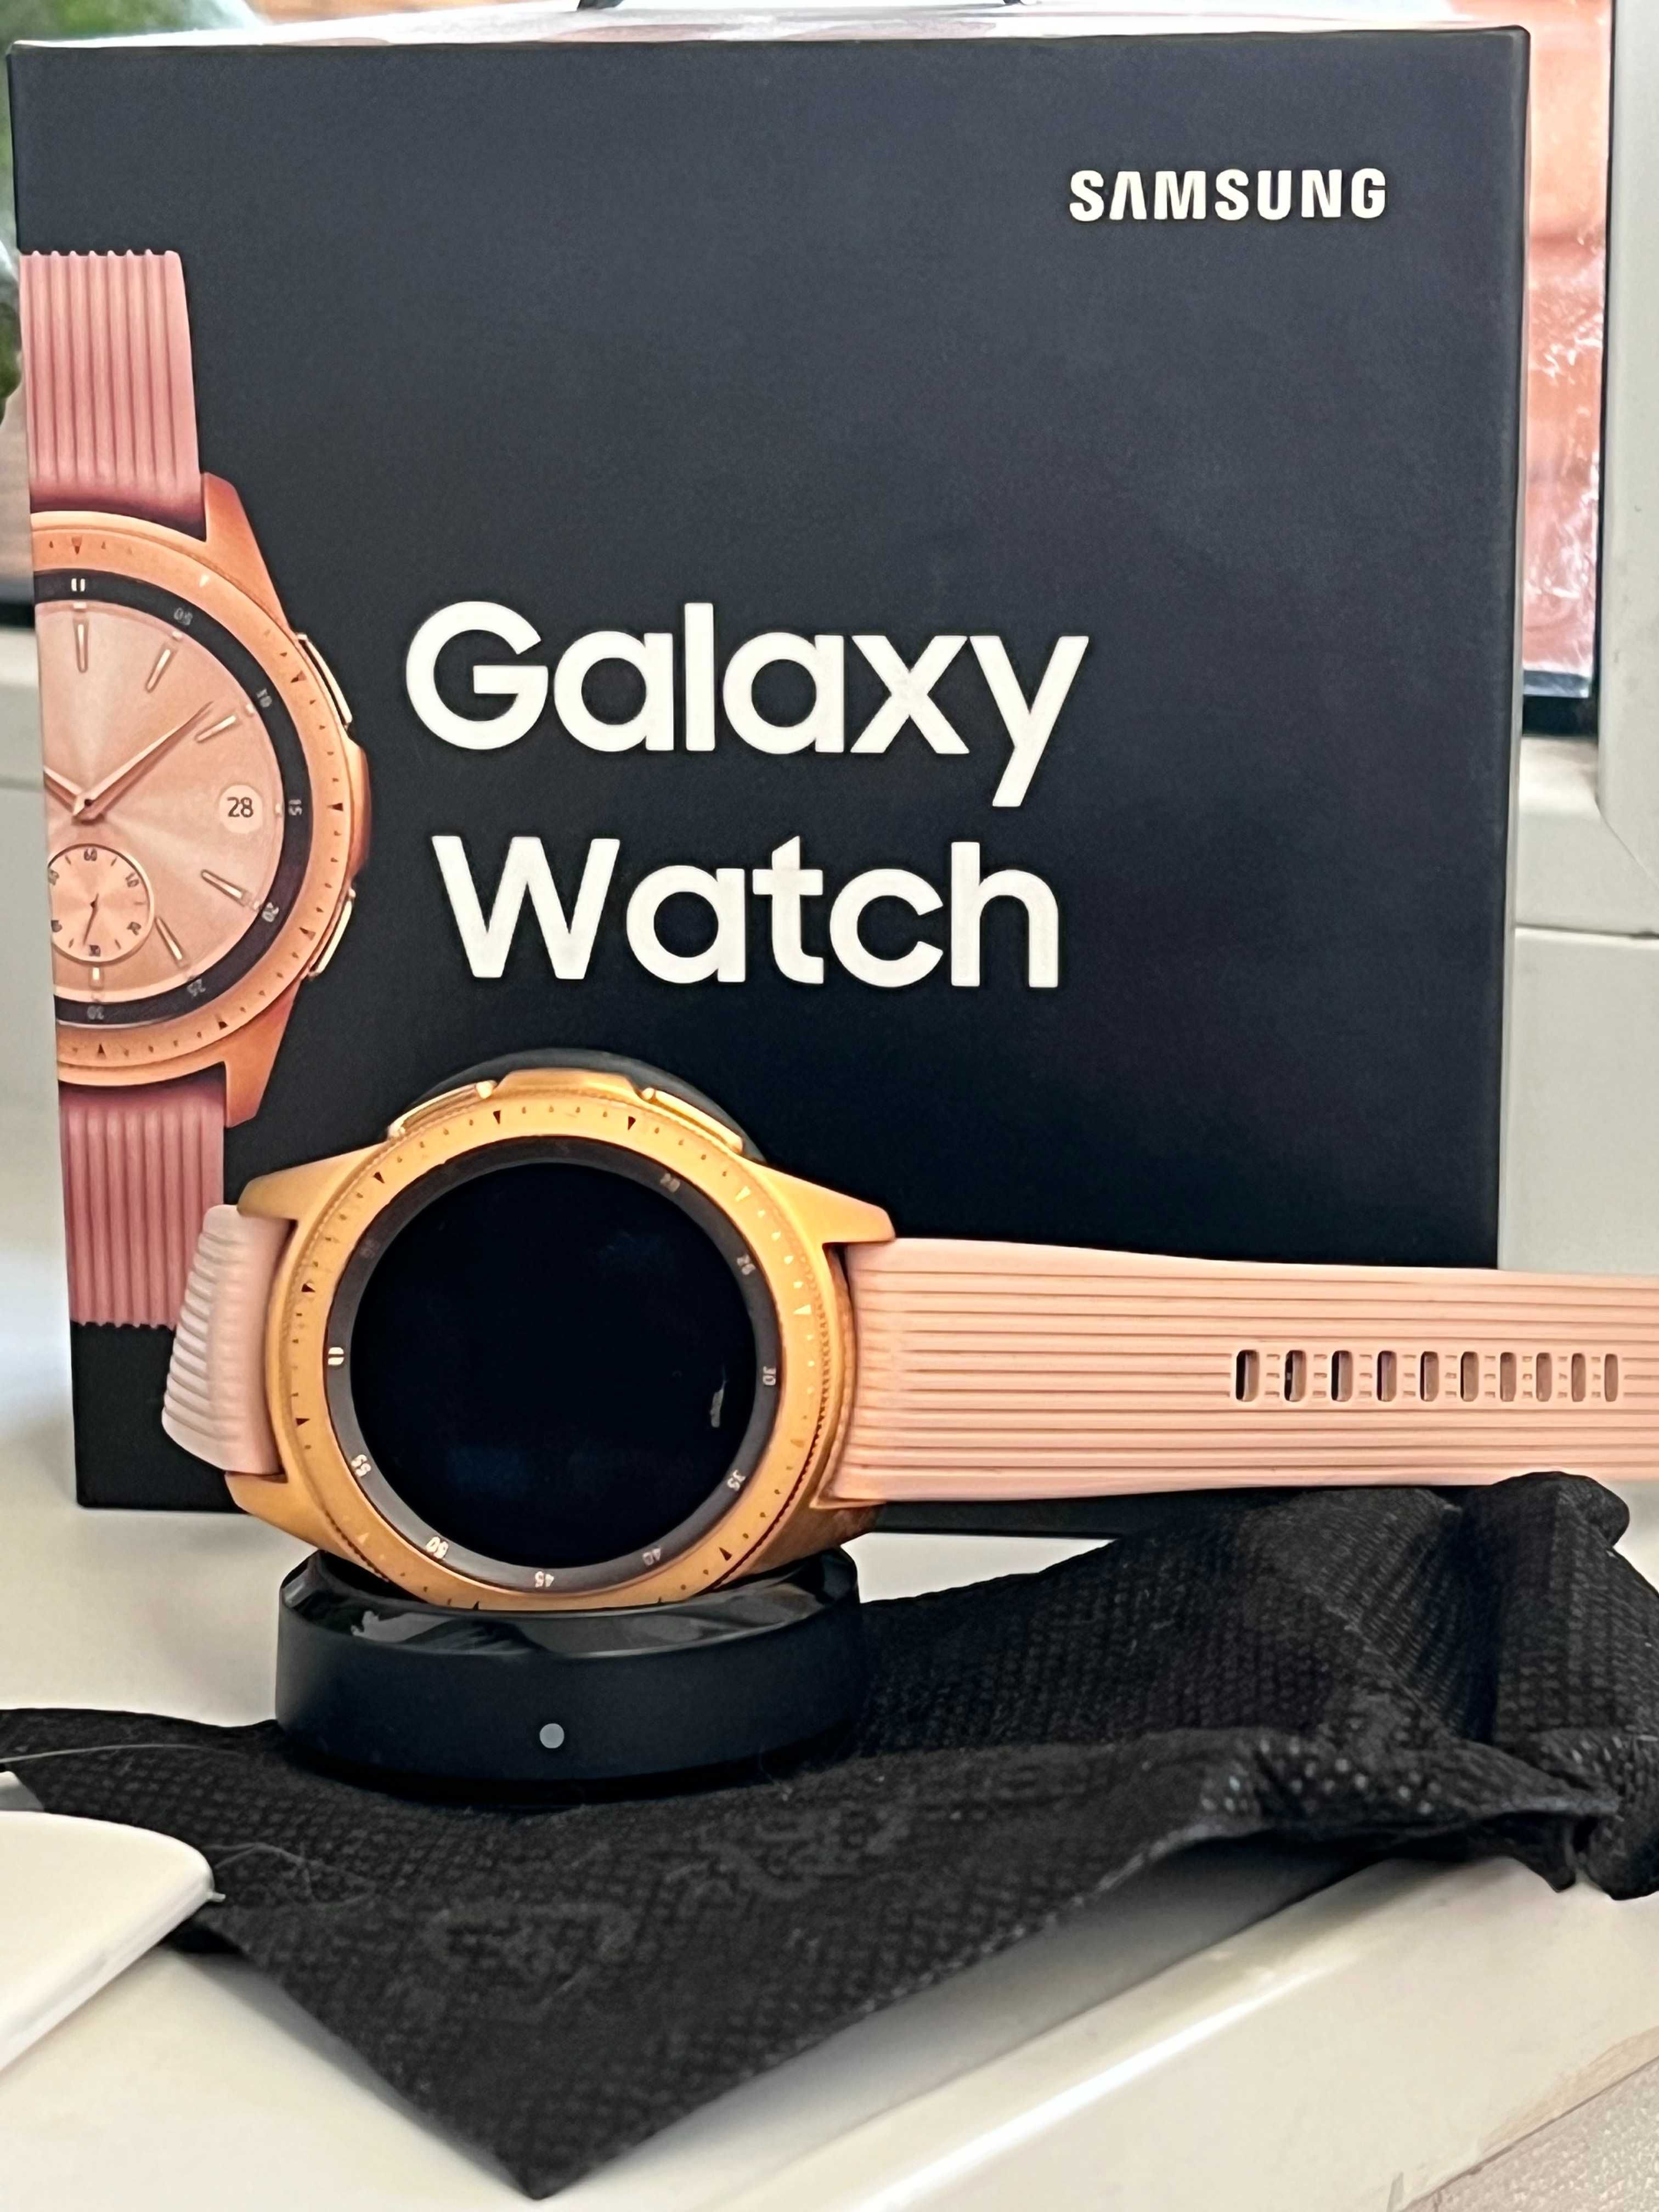 Galaxy Watch 42mm GOLD